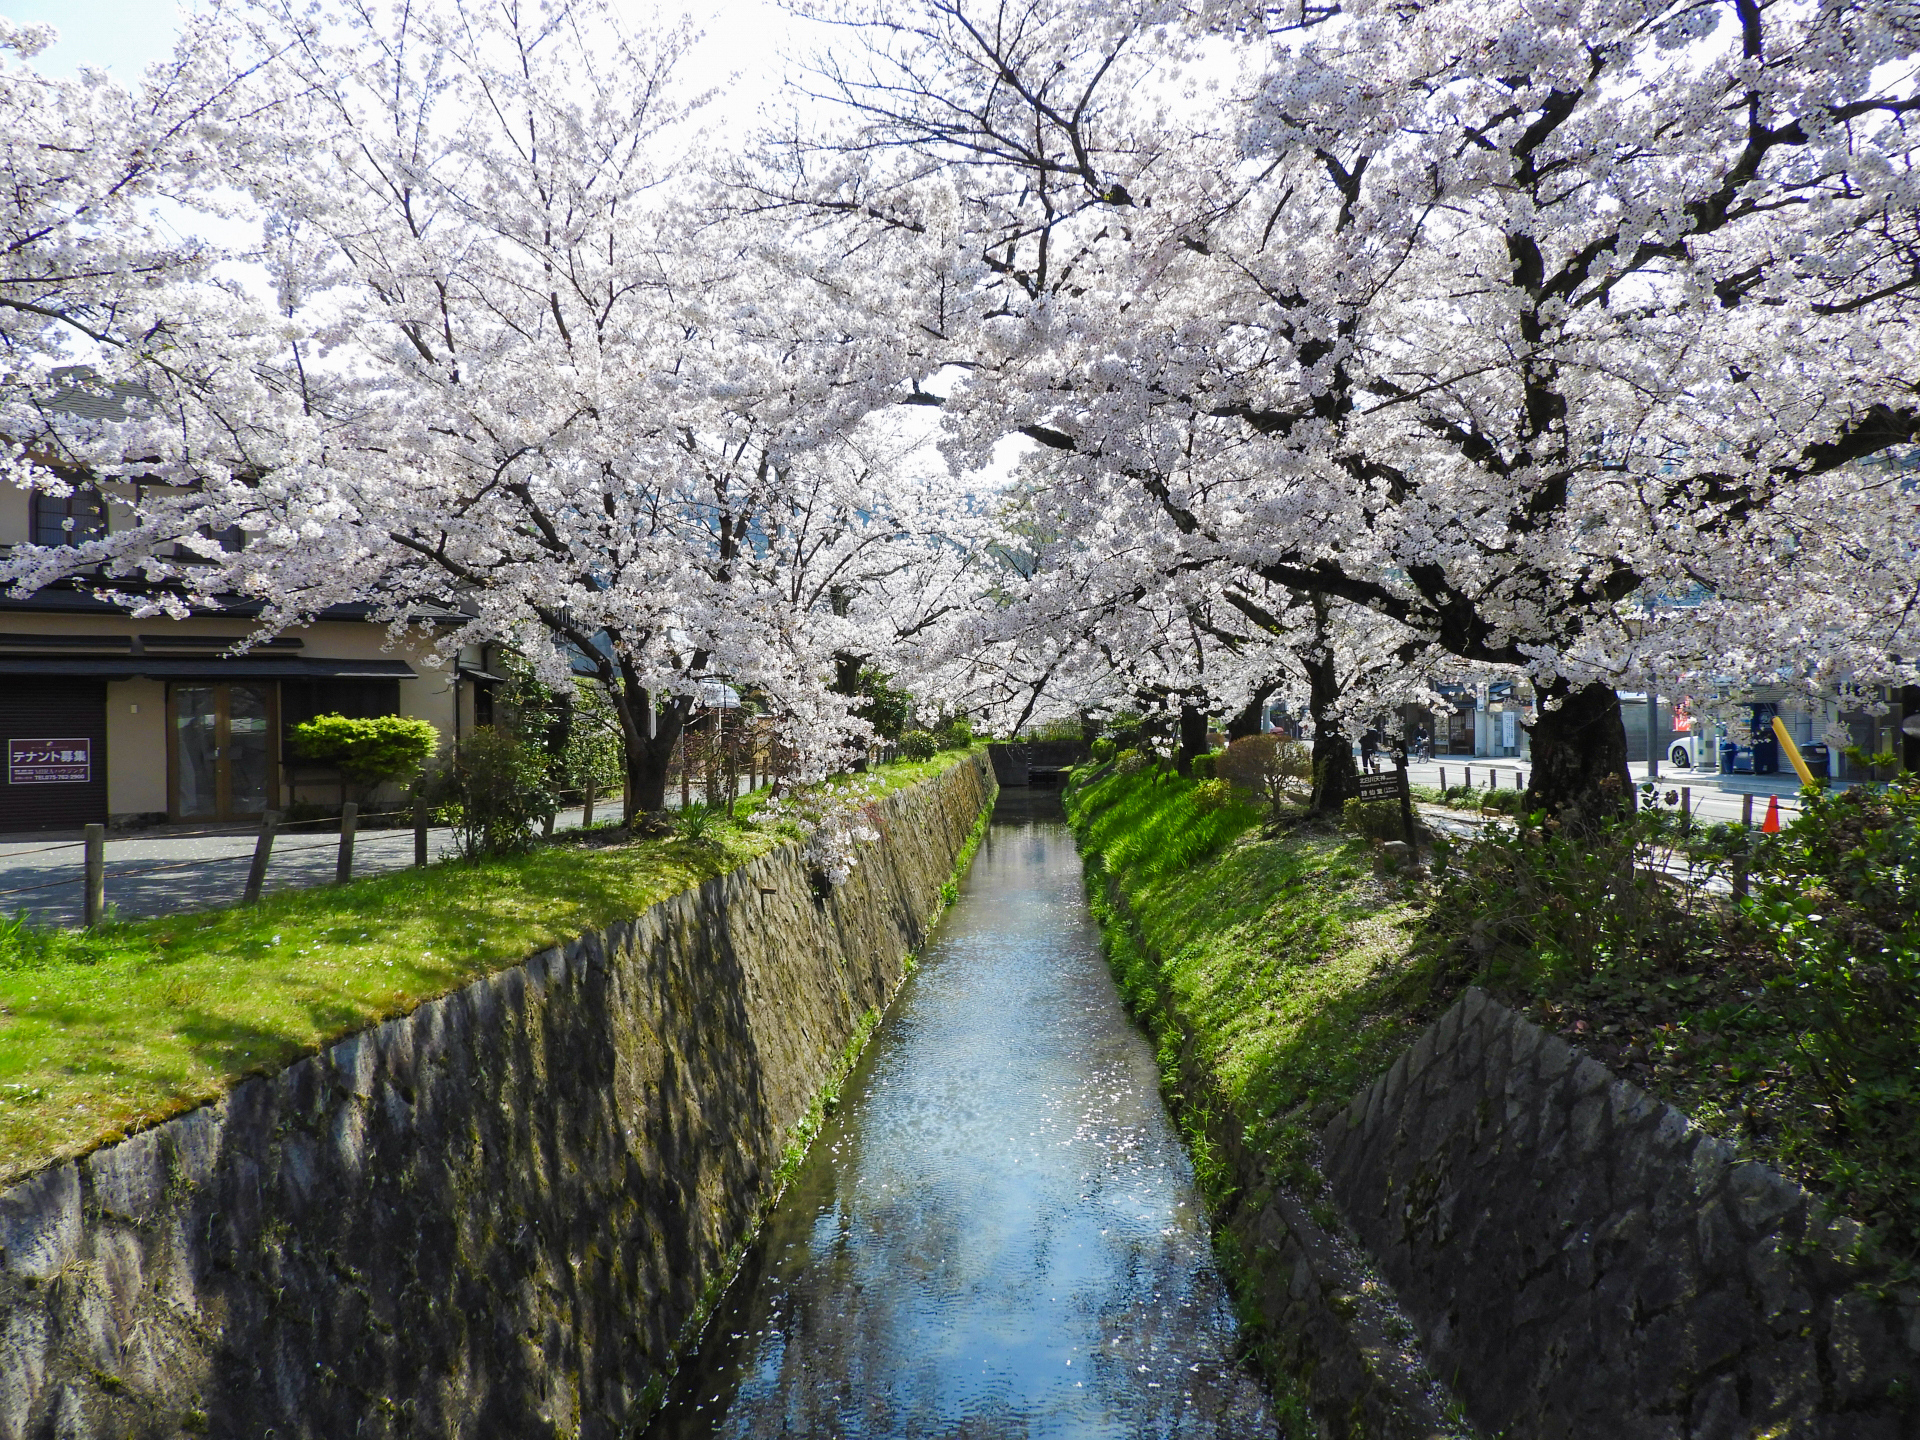 3718760_m 京都府 哲学の道(疎水沿いに咲く桜の並木道が美しい春におすすめ写真スポット! 写真の紹介、アクセス情報など)